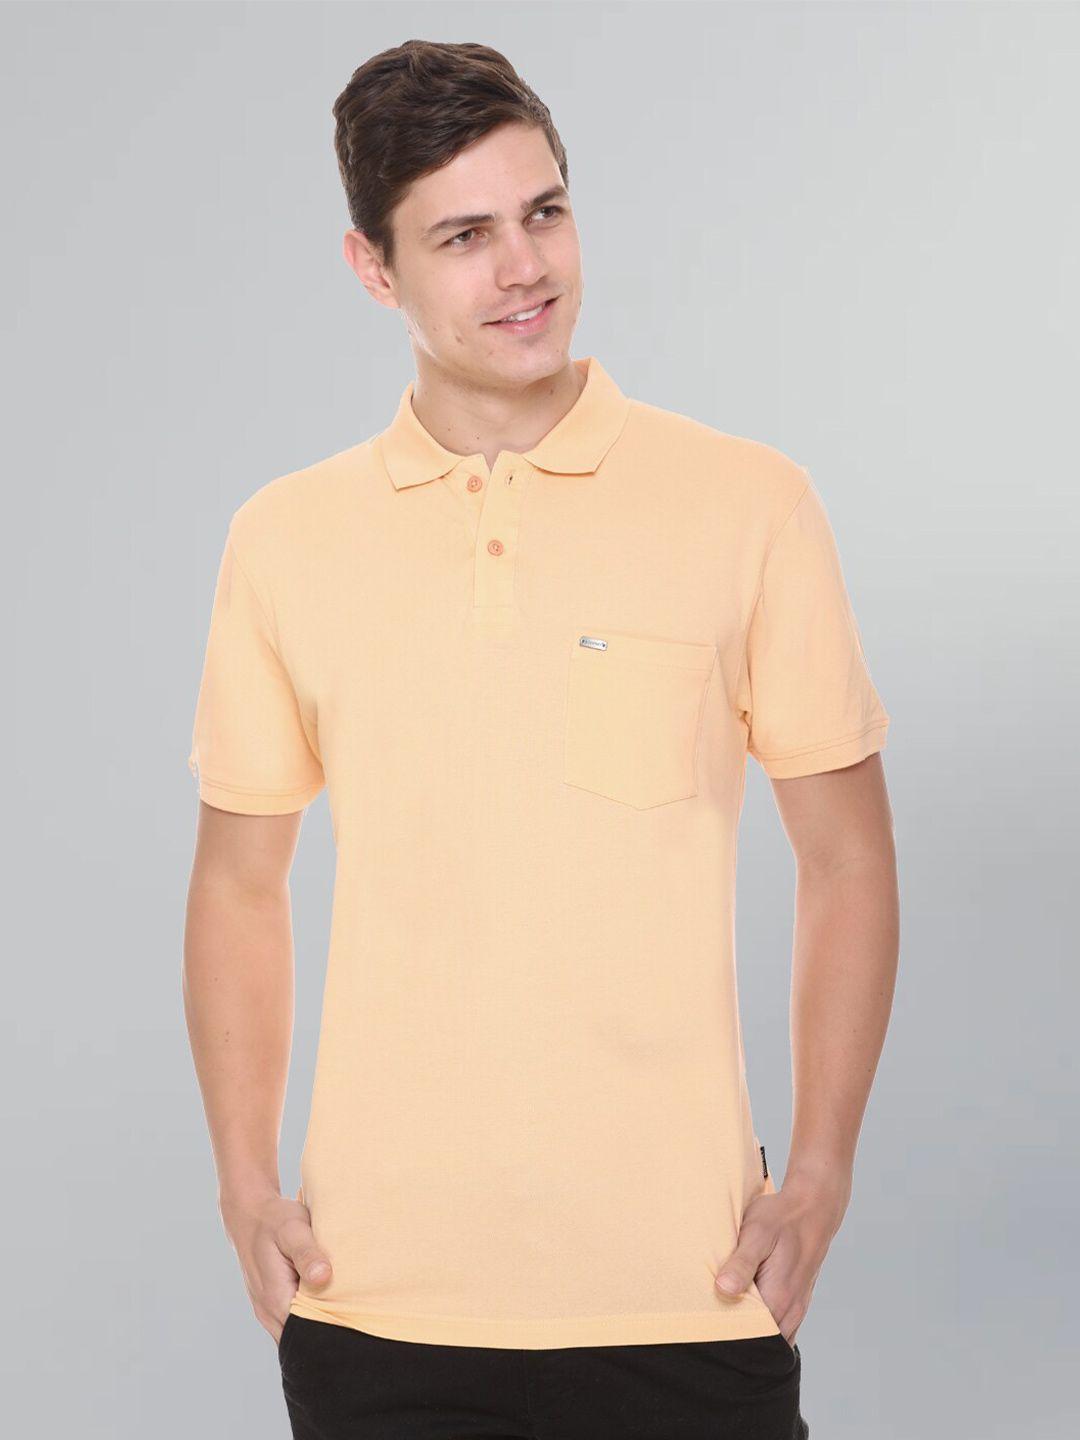 godfrey polo collar cotton rapid-dry t-shirt